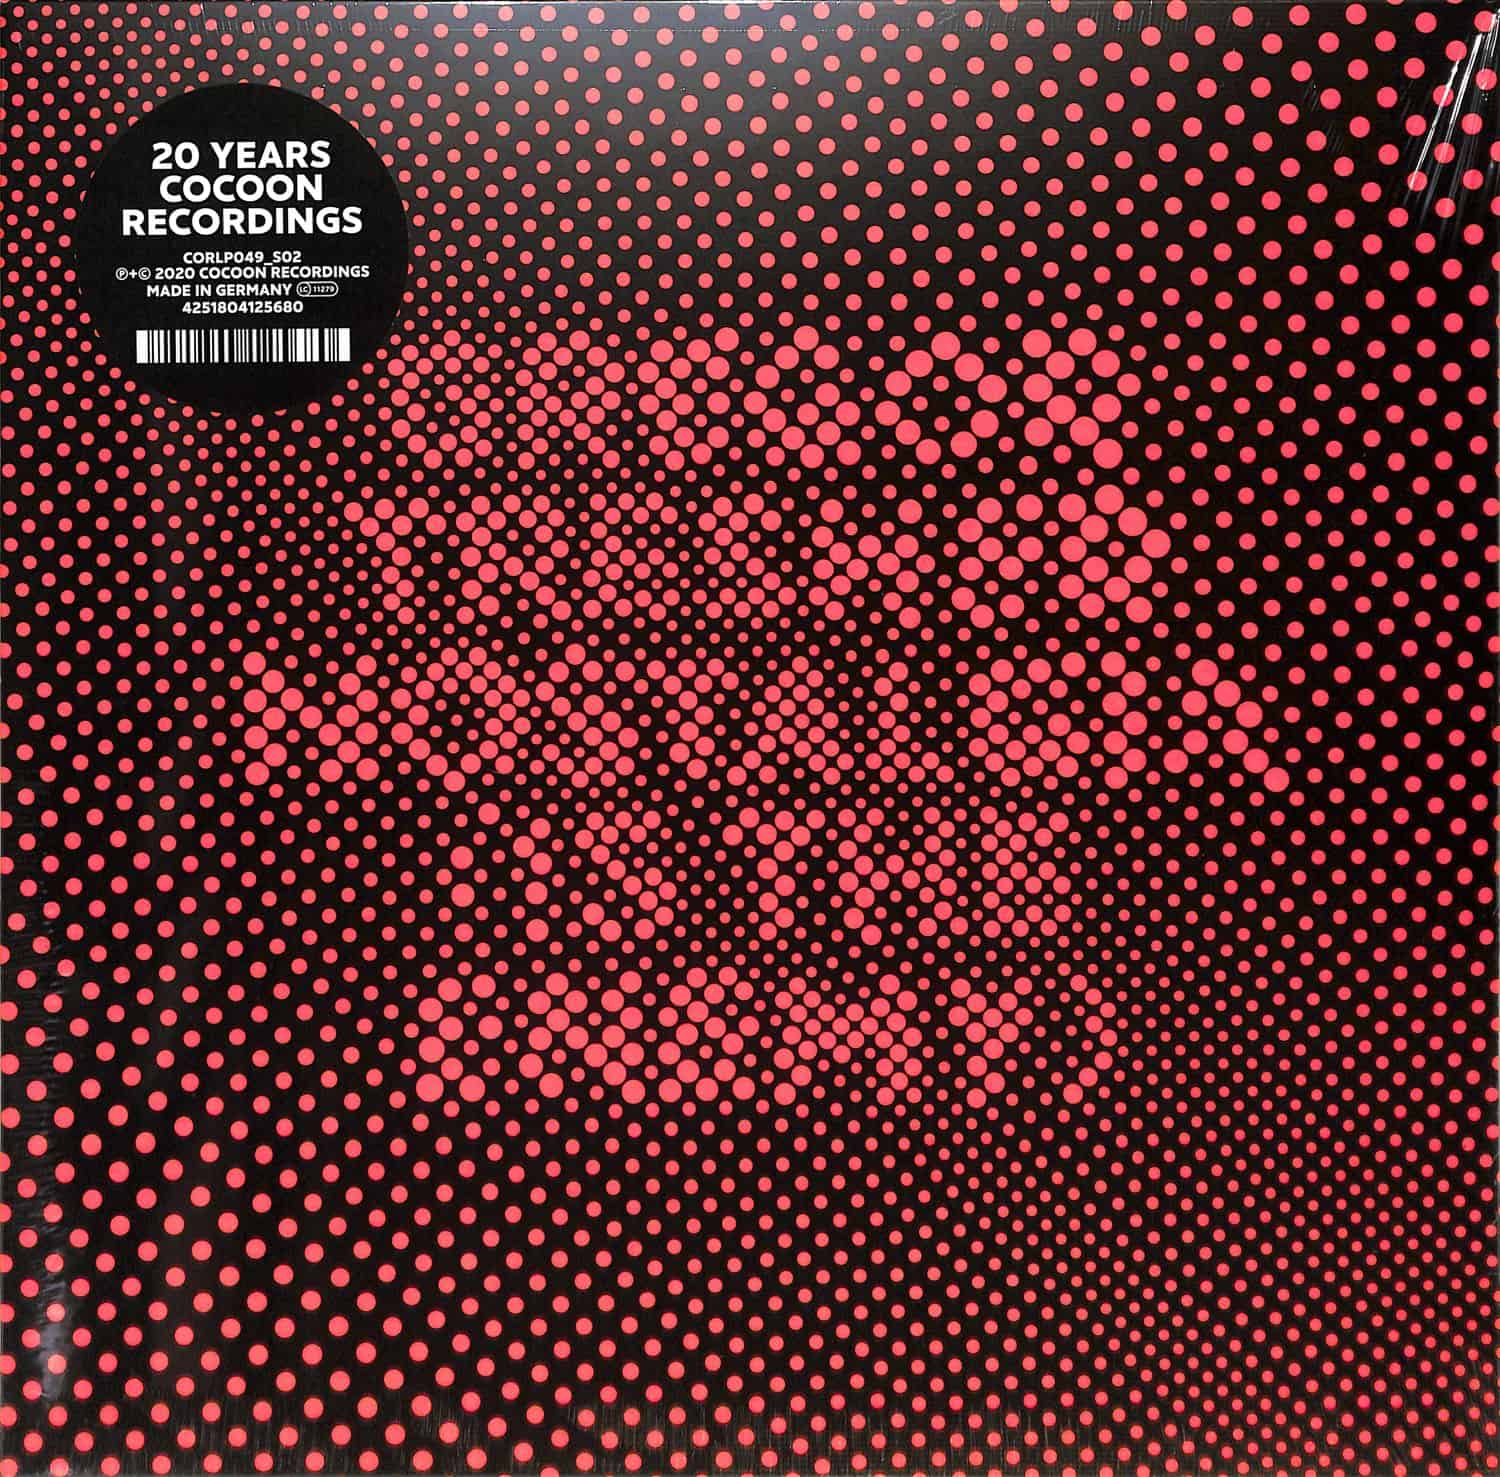 Gregor Tresher / Joseph Ashworth / Pig&Dan - 20 YEARS COCOON RECORDINGS EP2